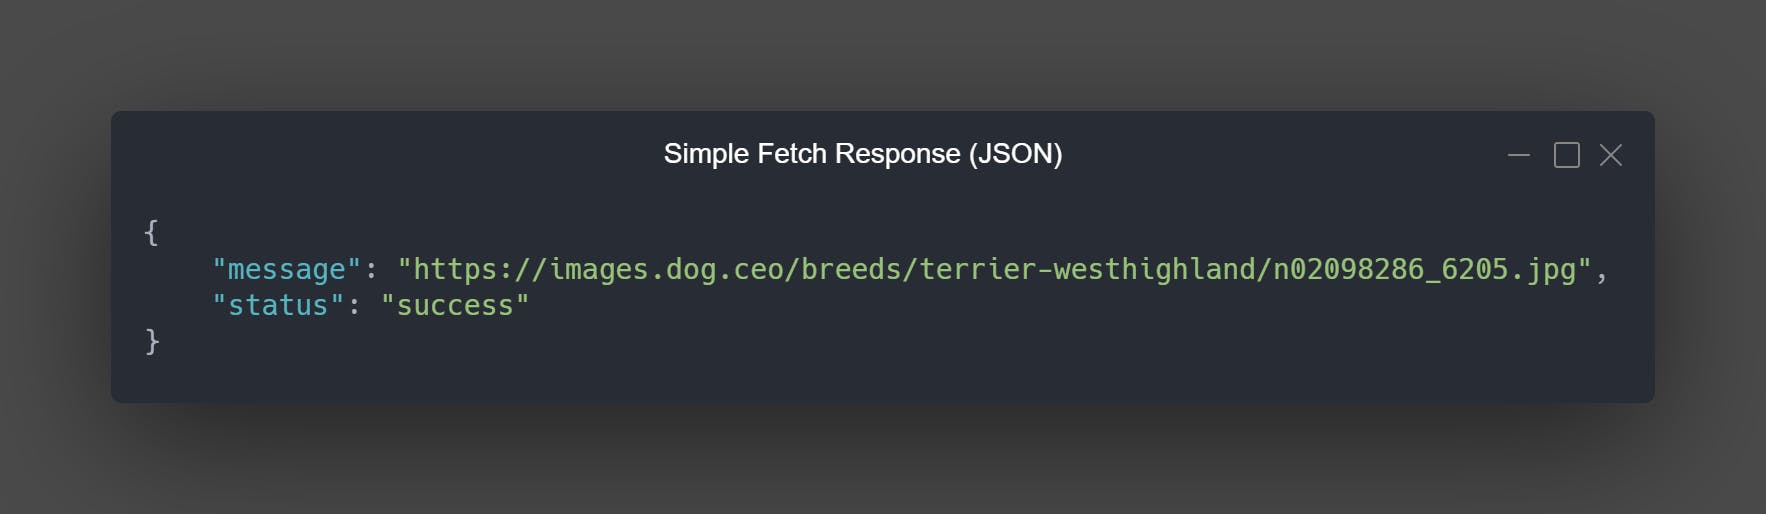 image-simple-fetch-json-response